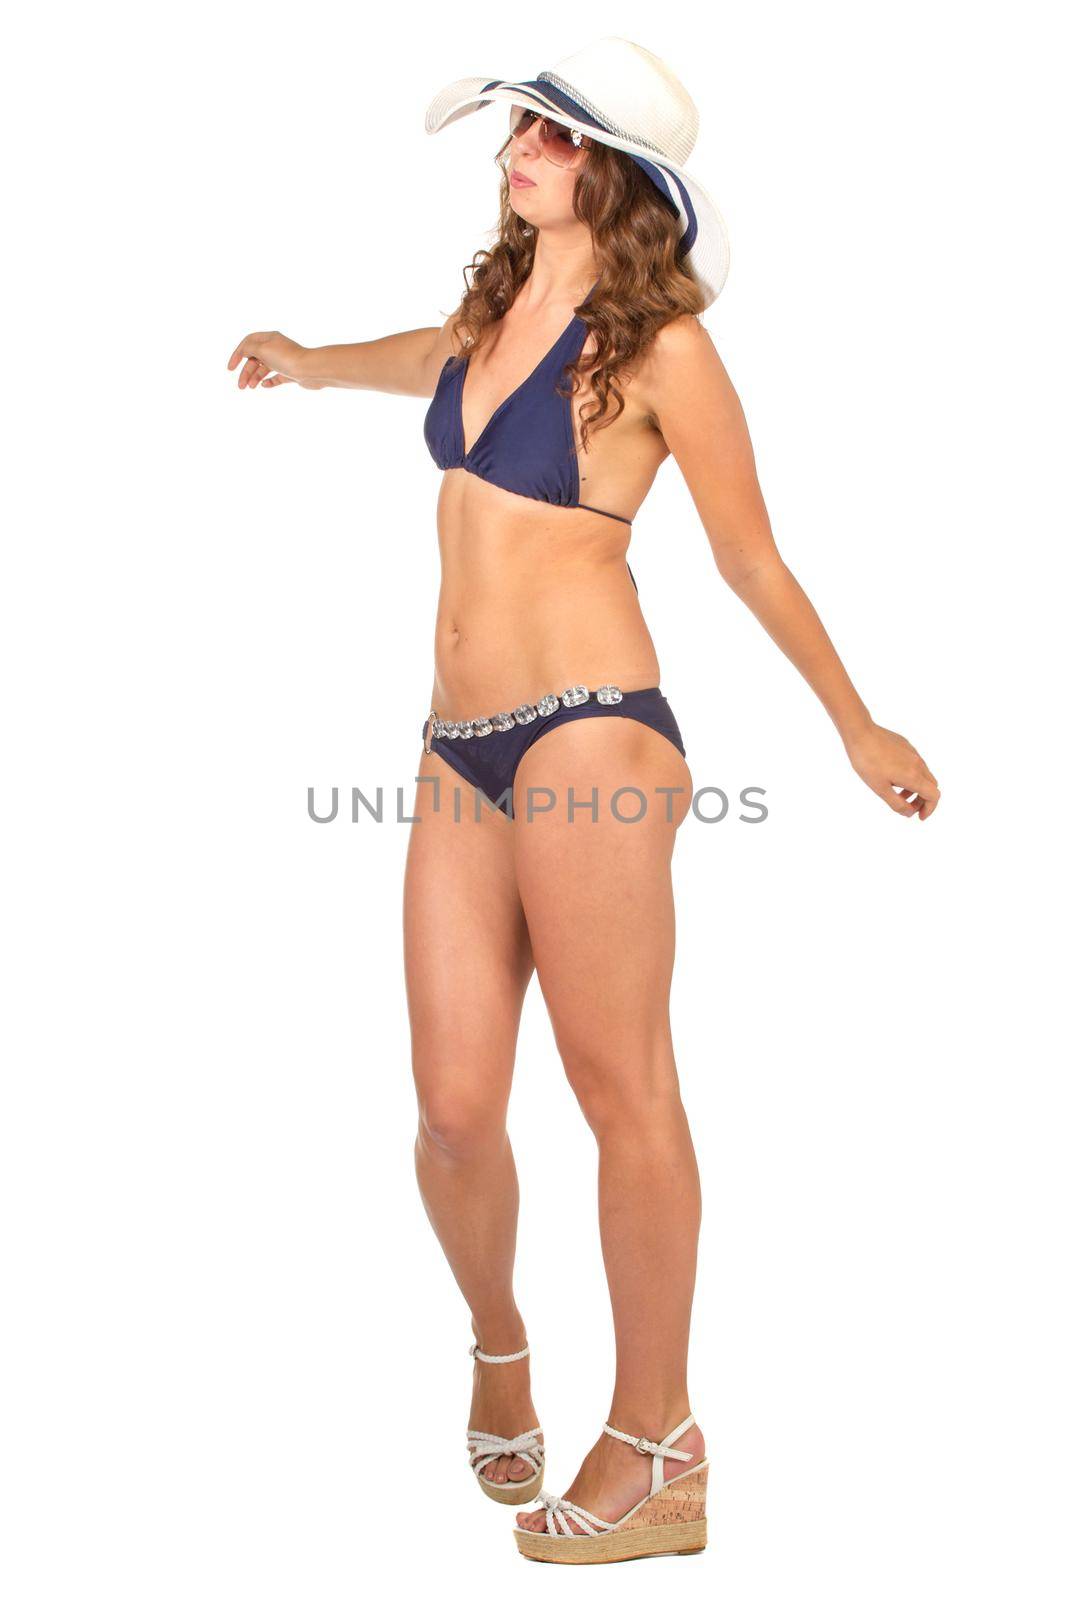 Pretty girl posing in bikini summer hat and sunglasses looking up